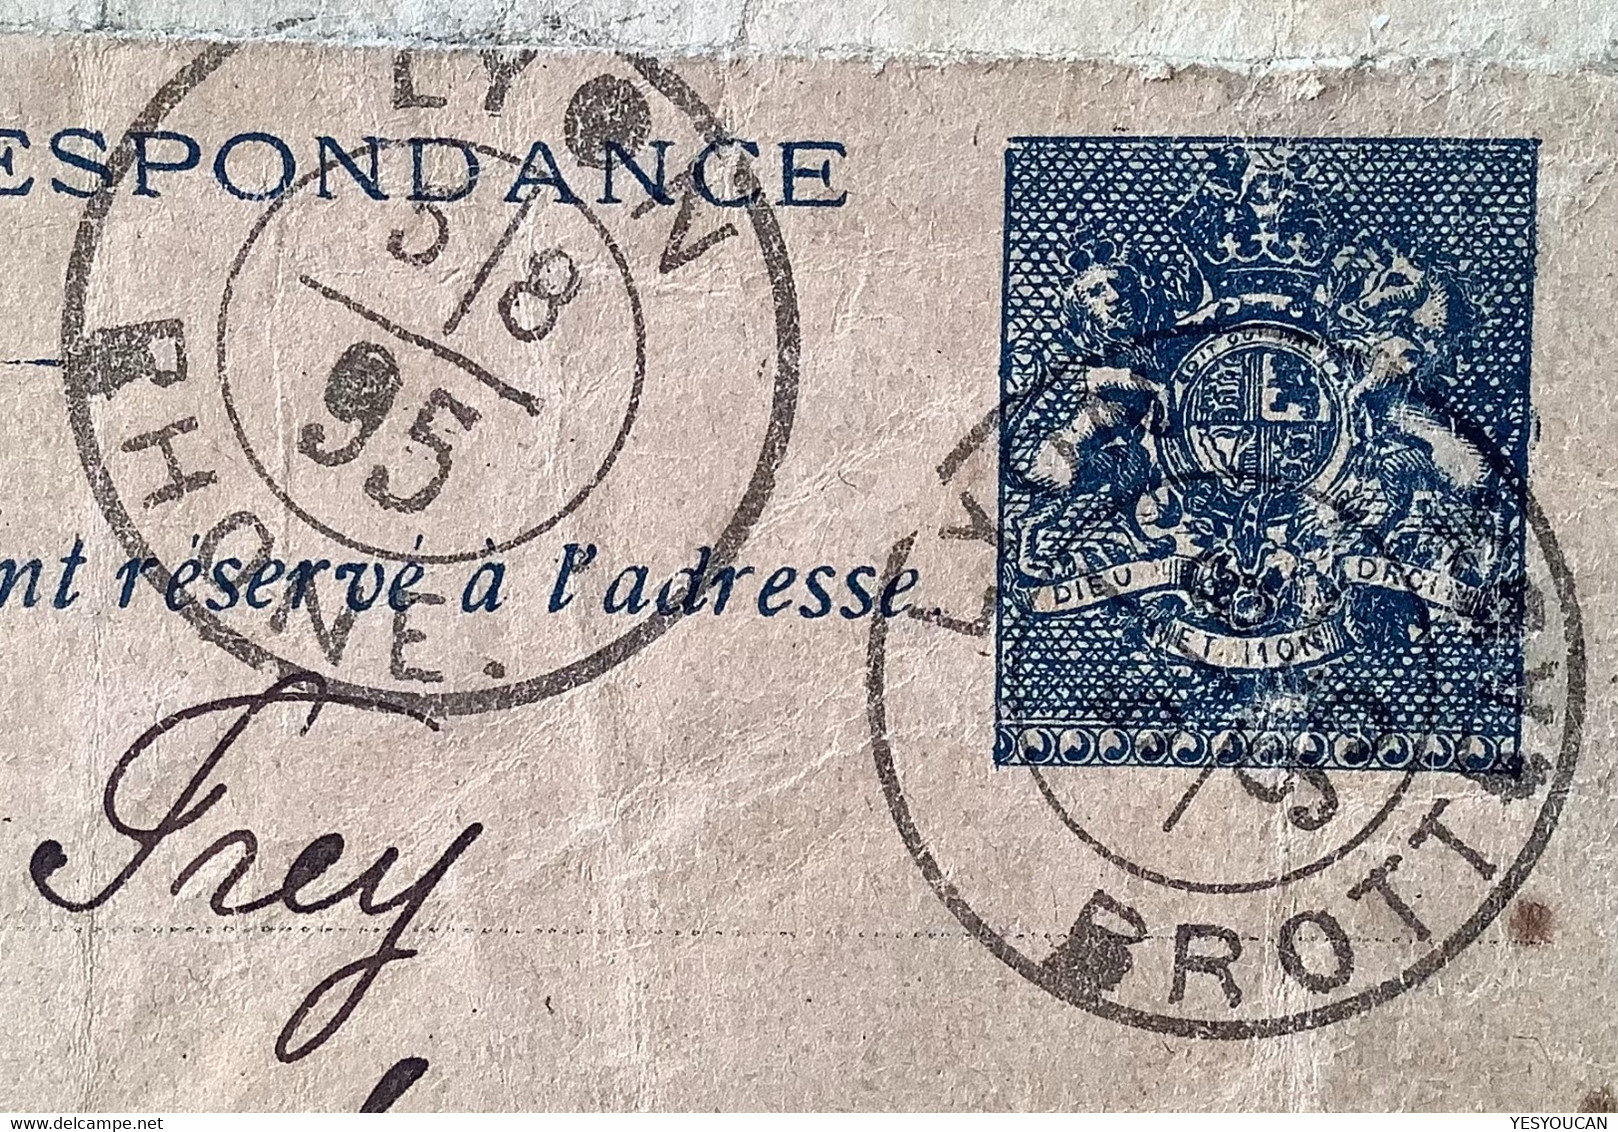 RR ! SPEUDO ENTIER POSTAL POSTE LOCALE PUB. 1895 LYON" London House Cours Morand" (France Cinderella Local Post Tailor - Letter Cards